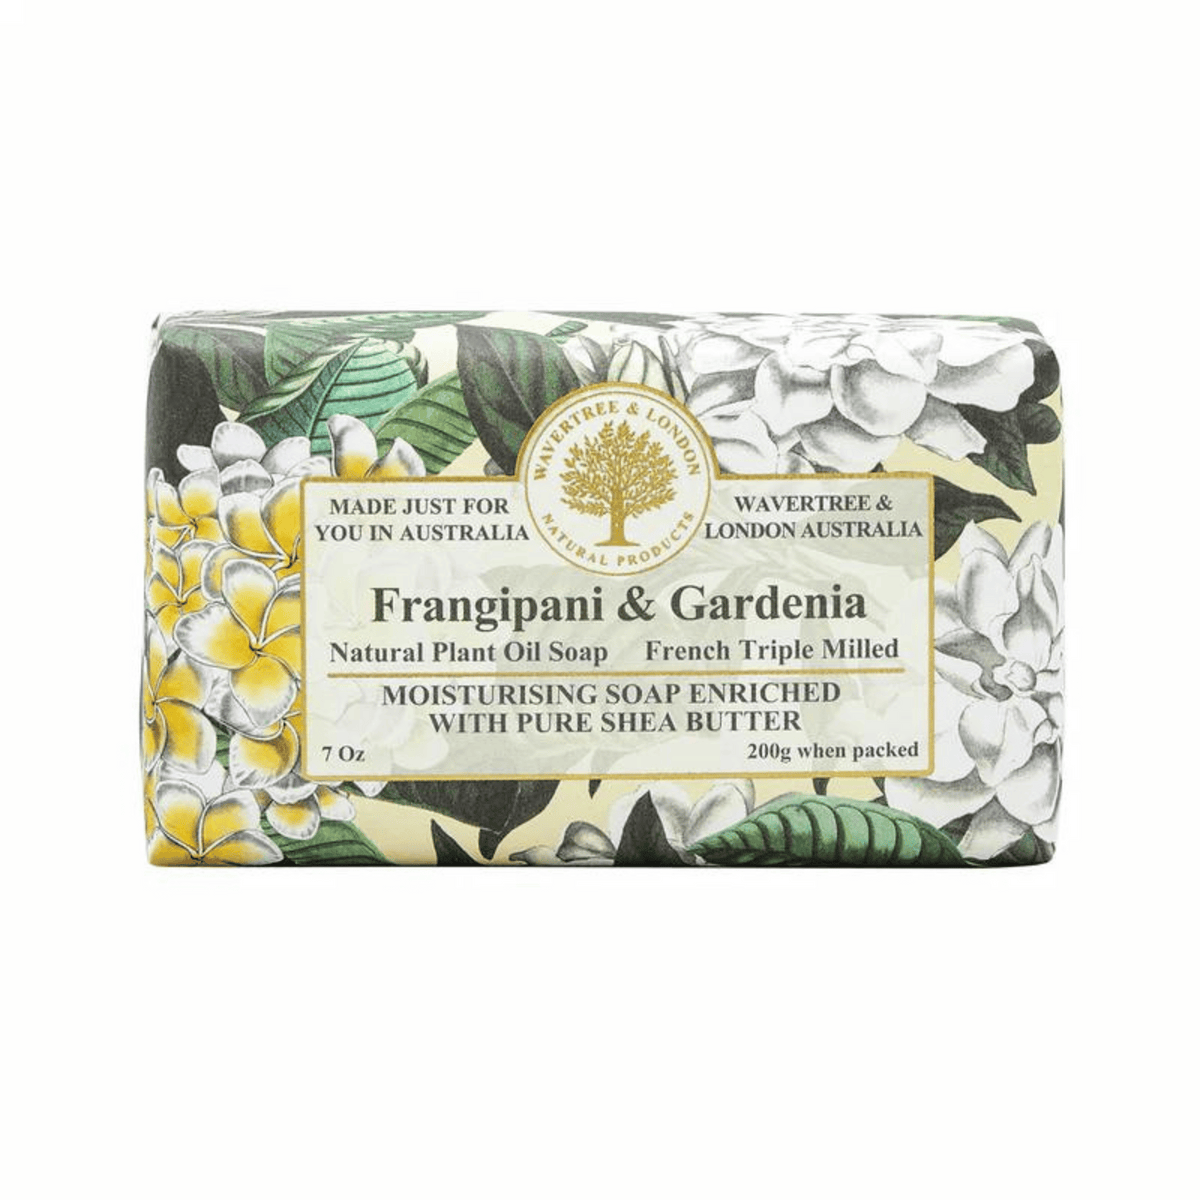 Primary Image of Frangipani & Gardenia Soap Bar